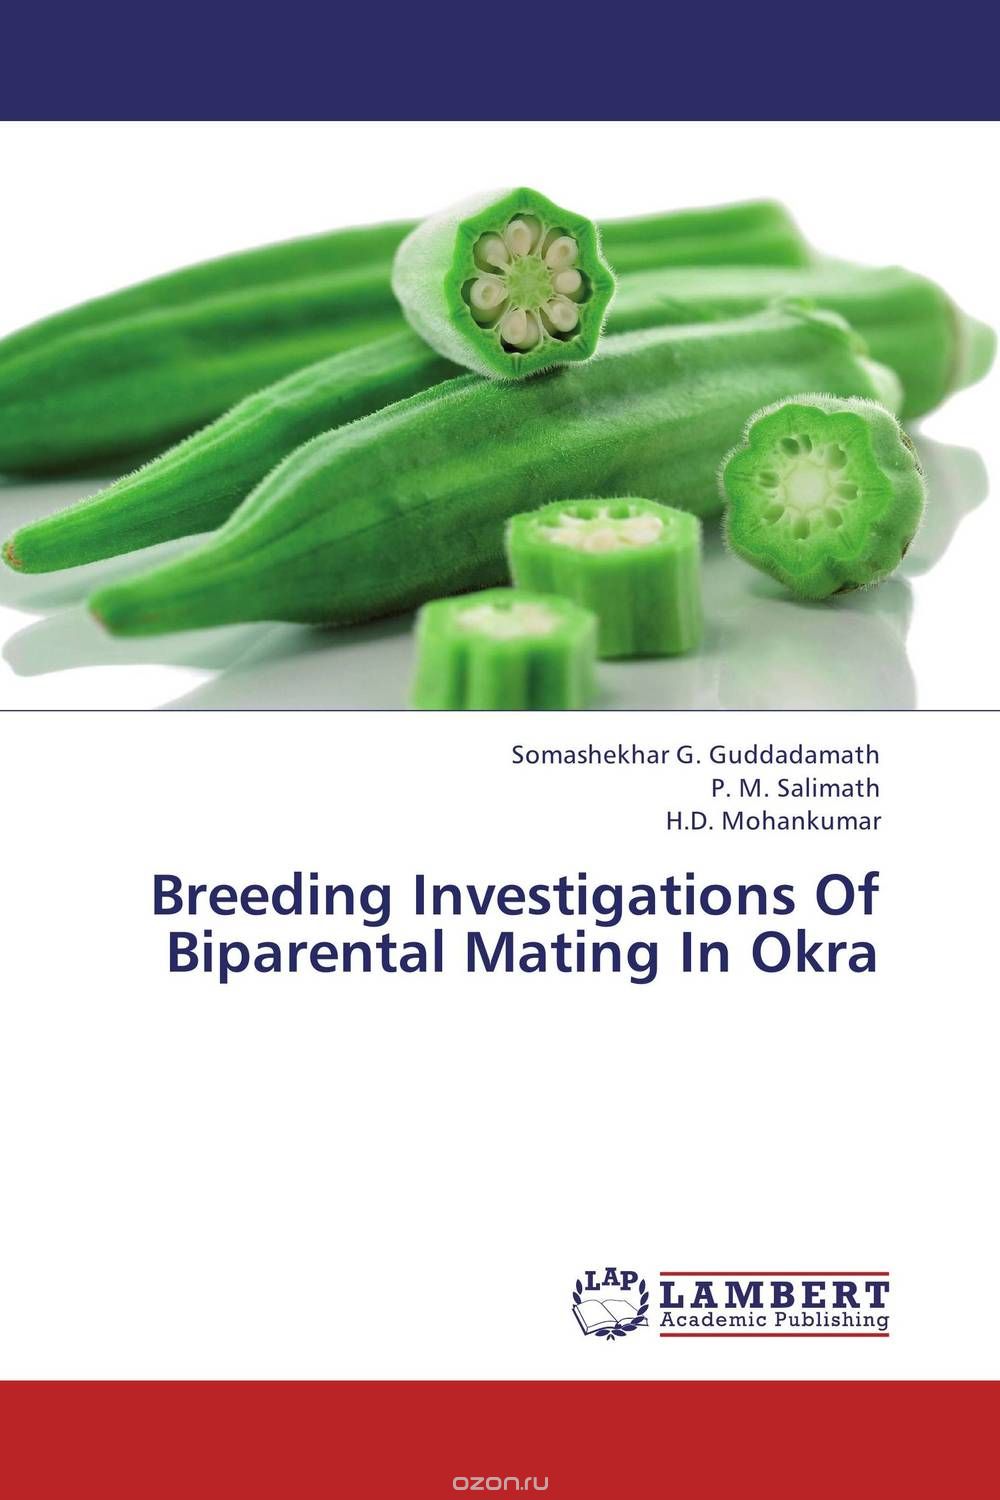 Скачать книгу "Breeding  Investigations Of Biparental Mating In Okra"